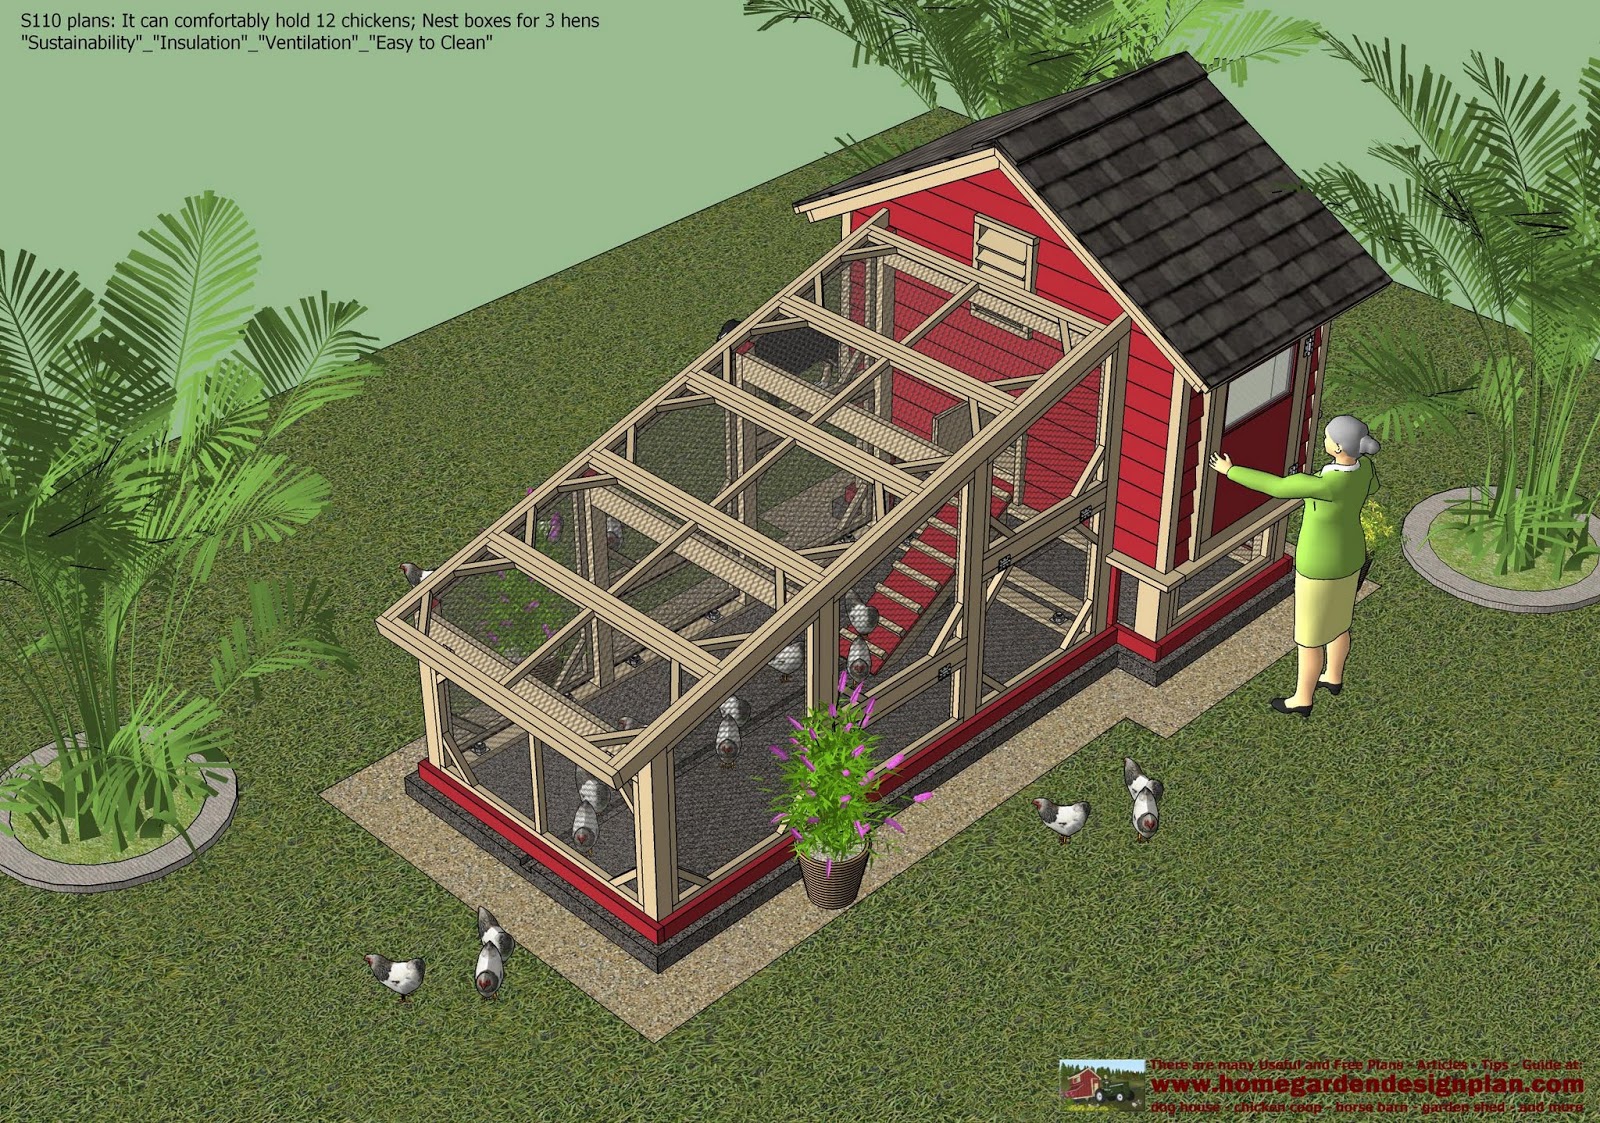 home garden plans: S110 - Chicken Coop Plans Construction 